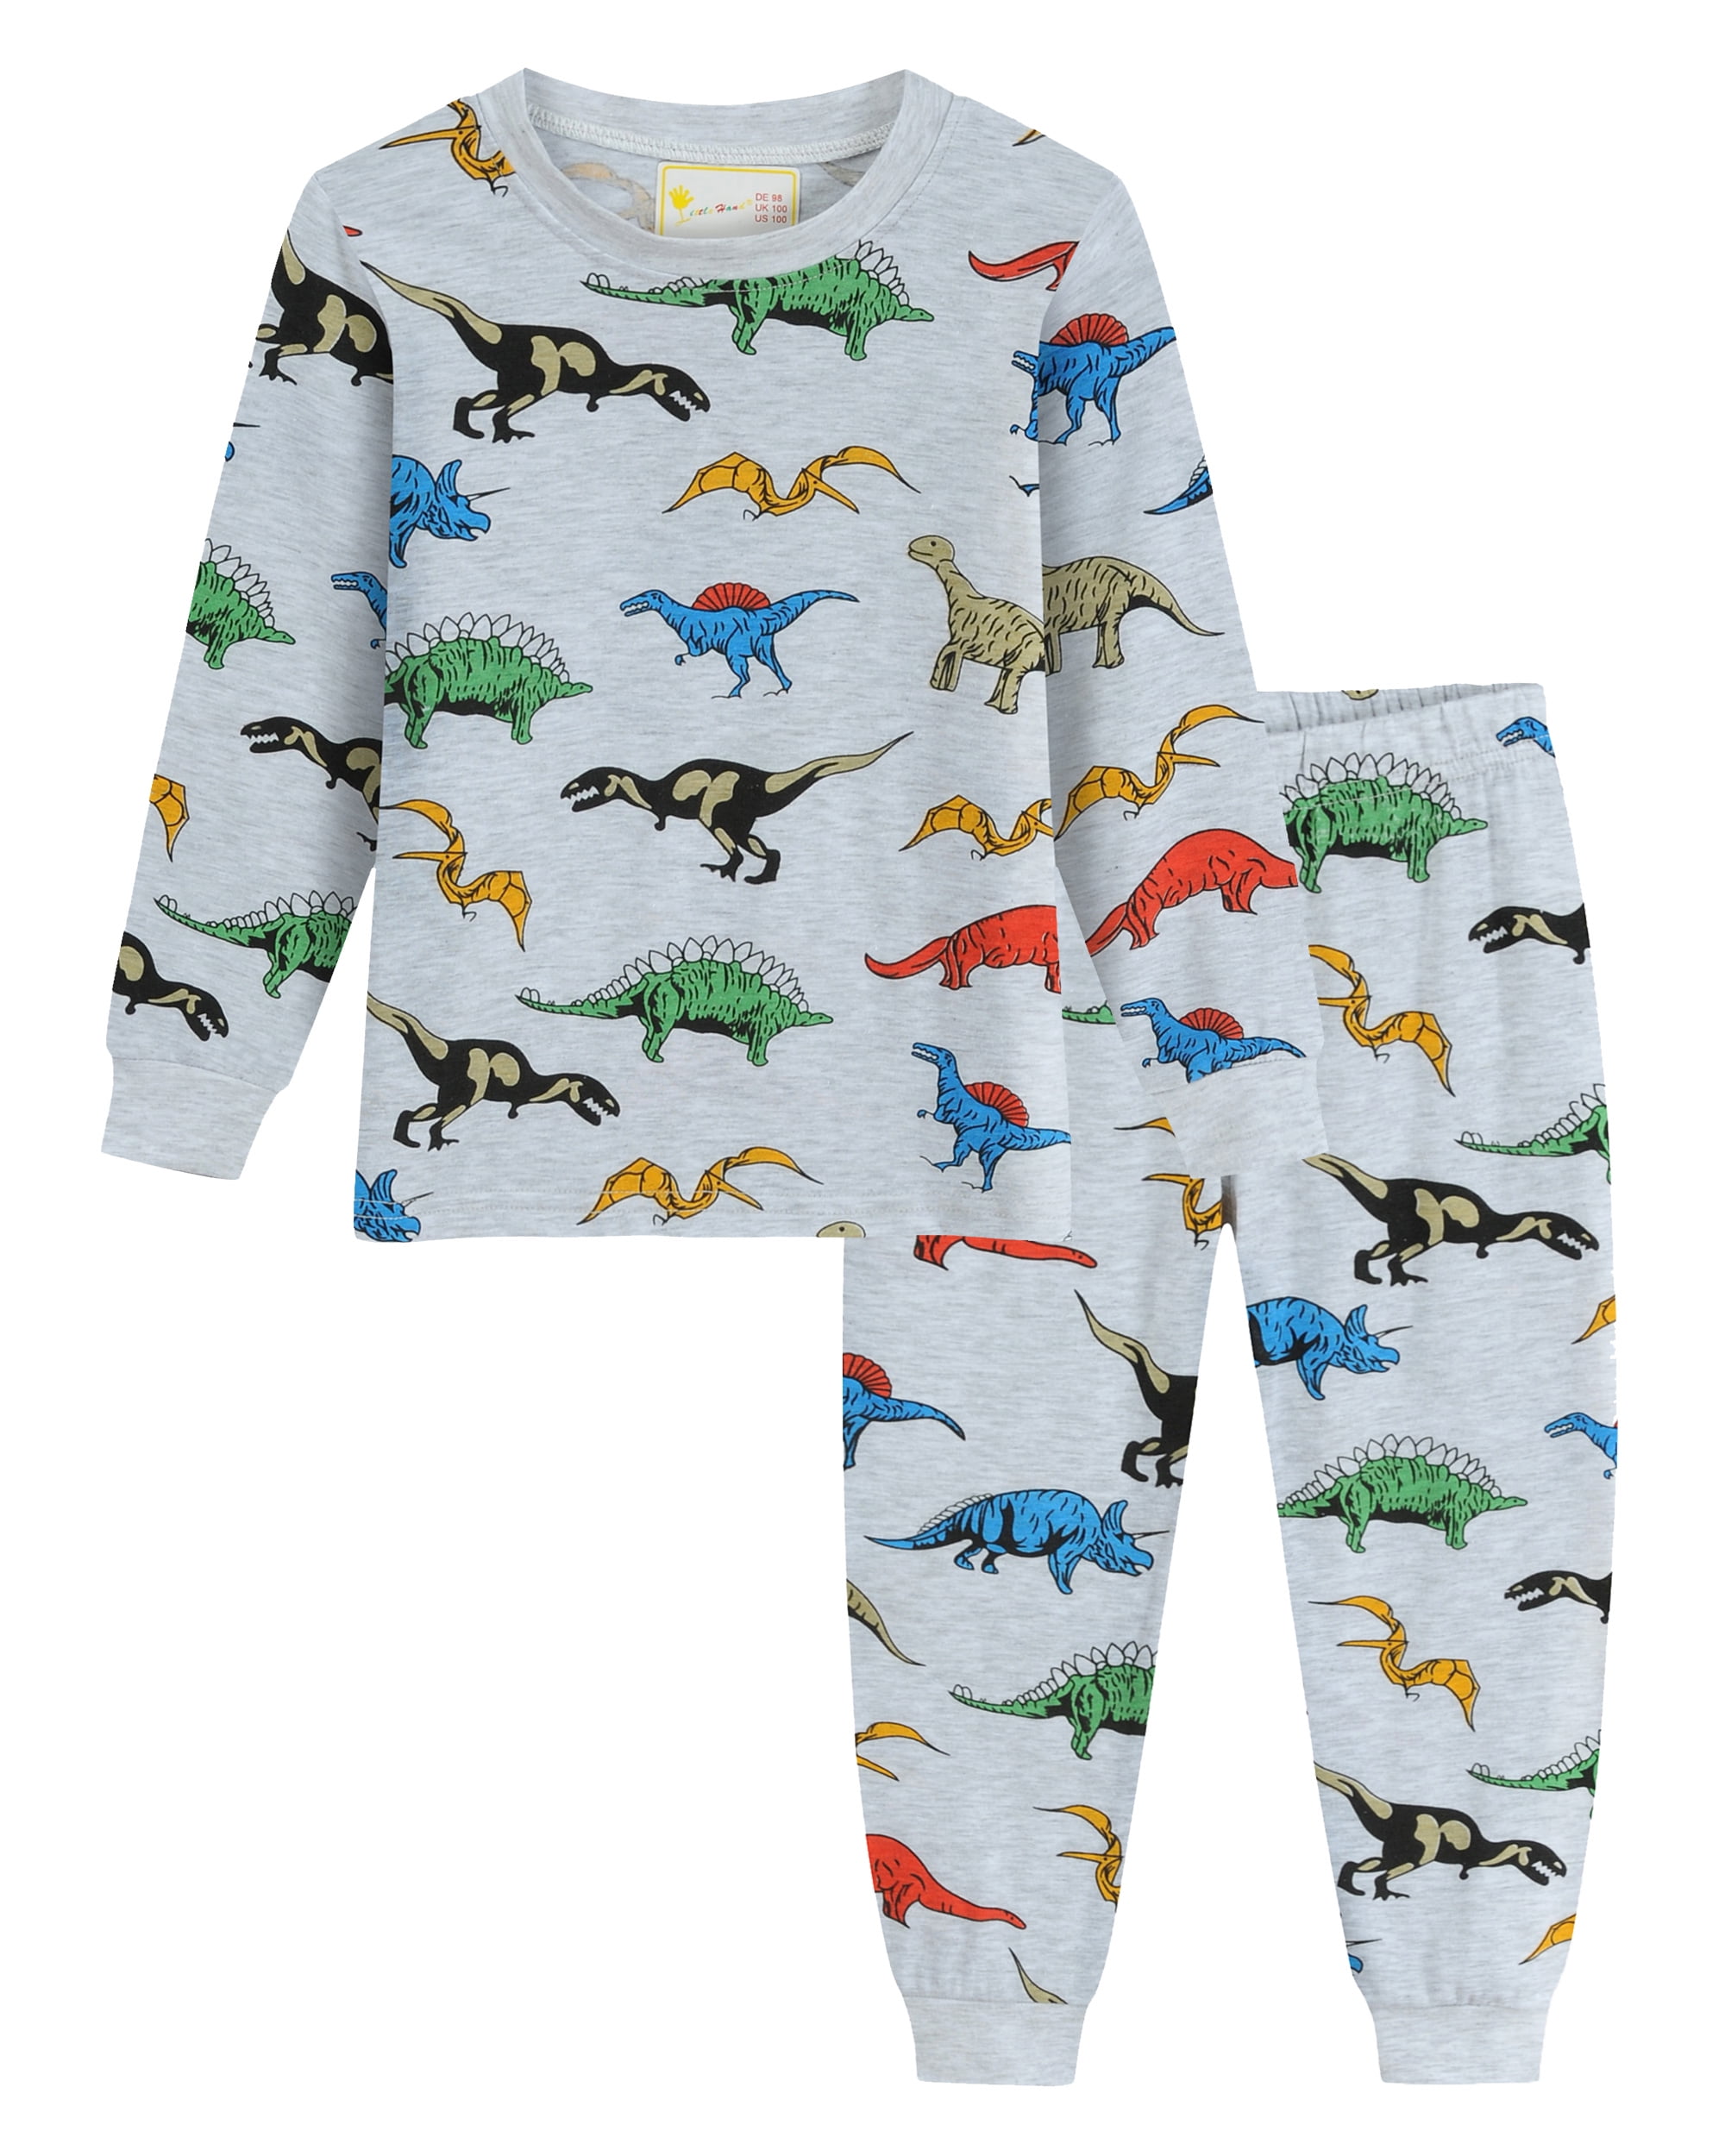 Little Hand Toddler Boy Dinosaur Clothes Sets Pajamas Sleepwear Pjs 5T ...